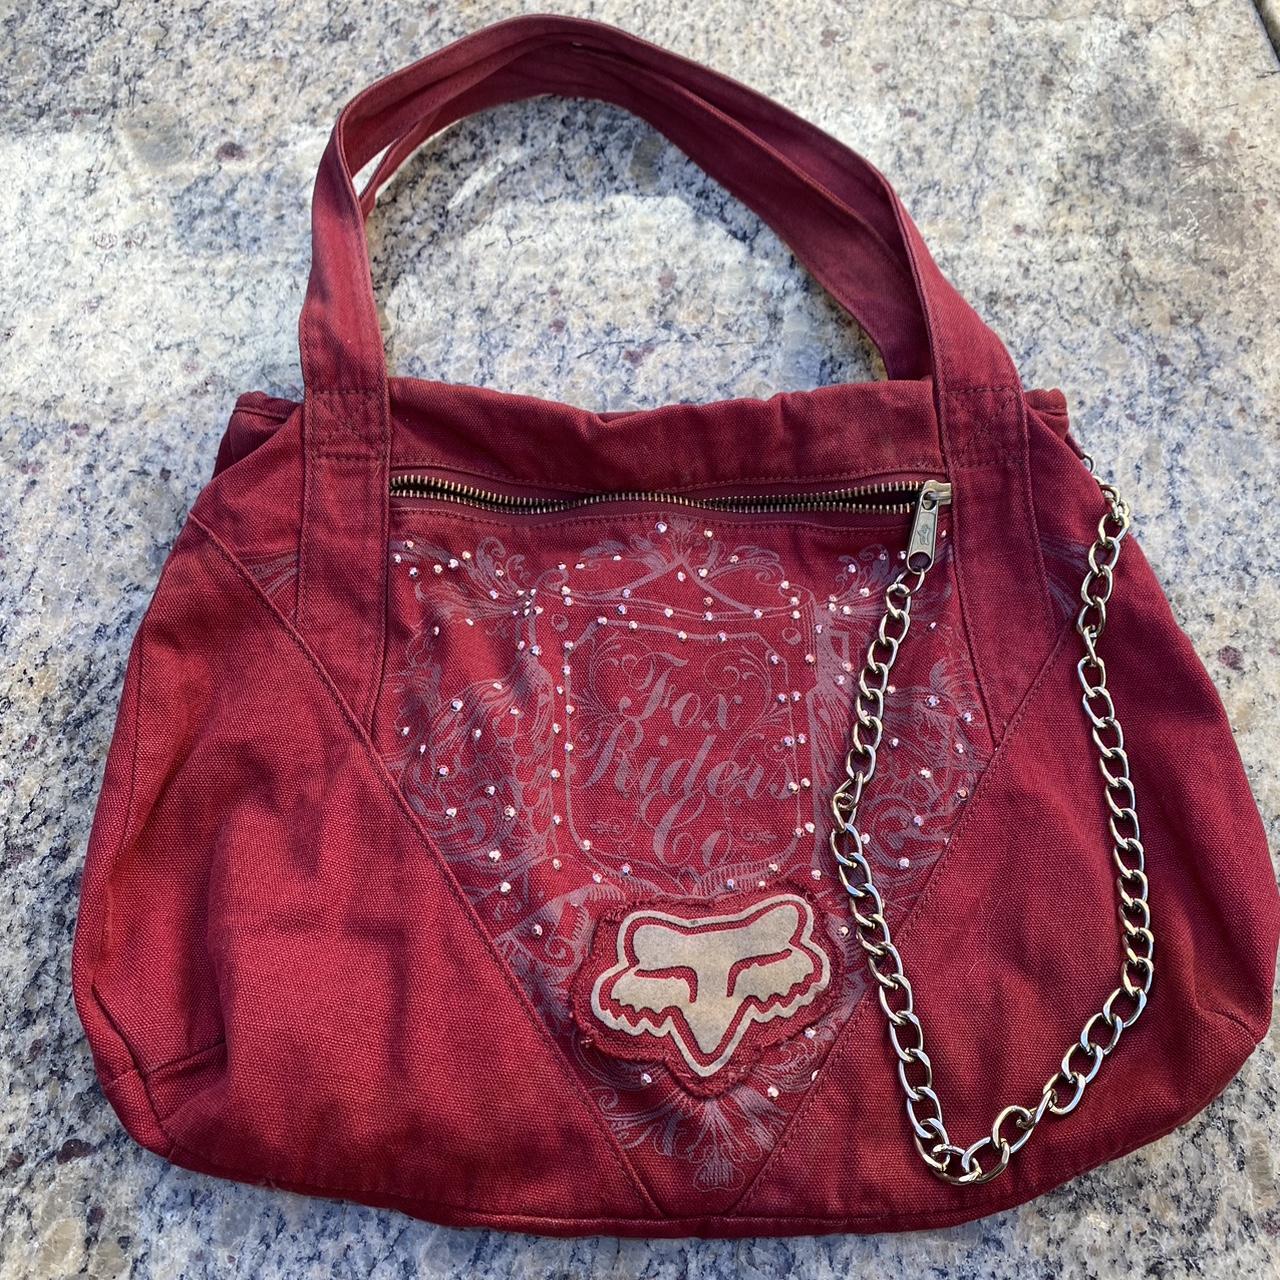 Fox Racing Handbags and Purses for Women for sale | eBay